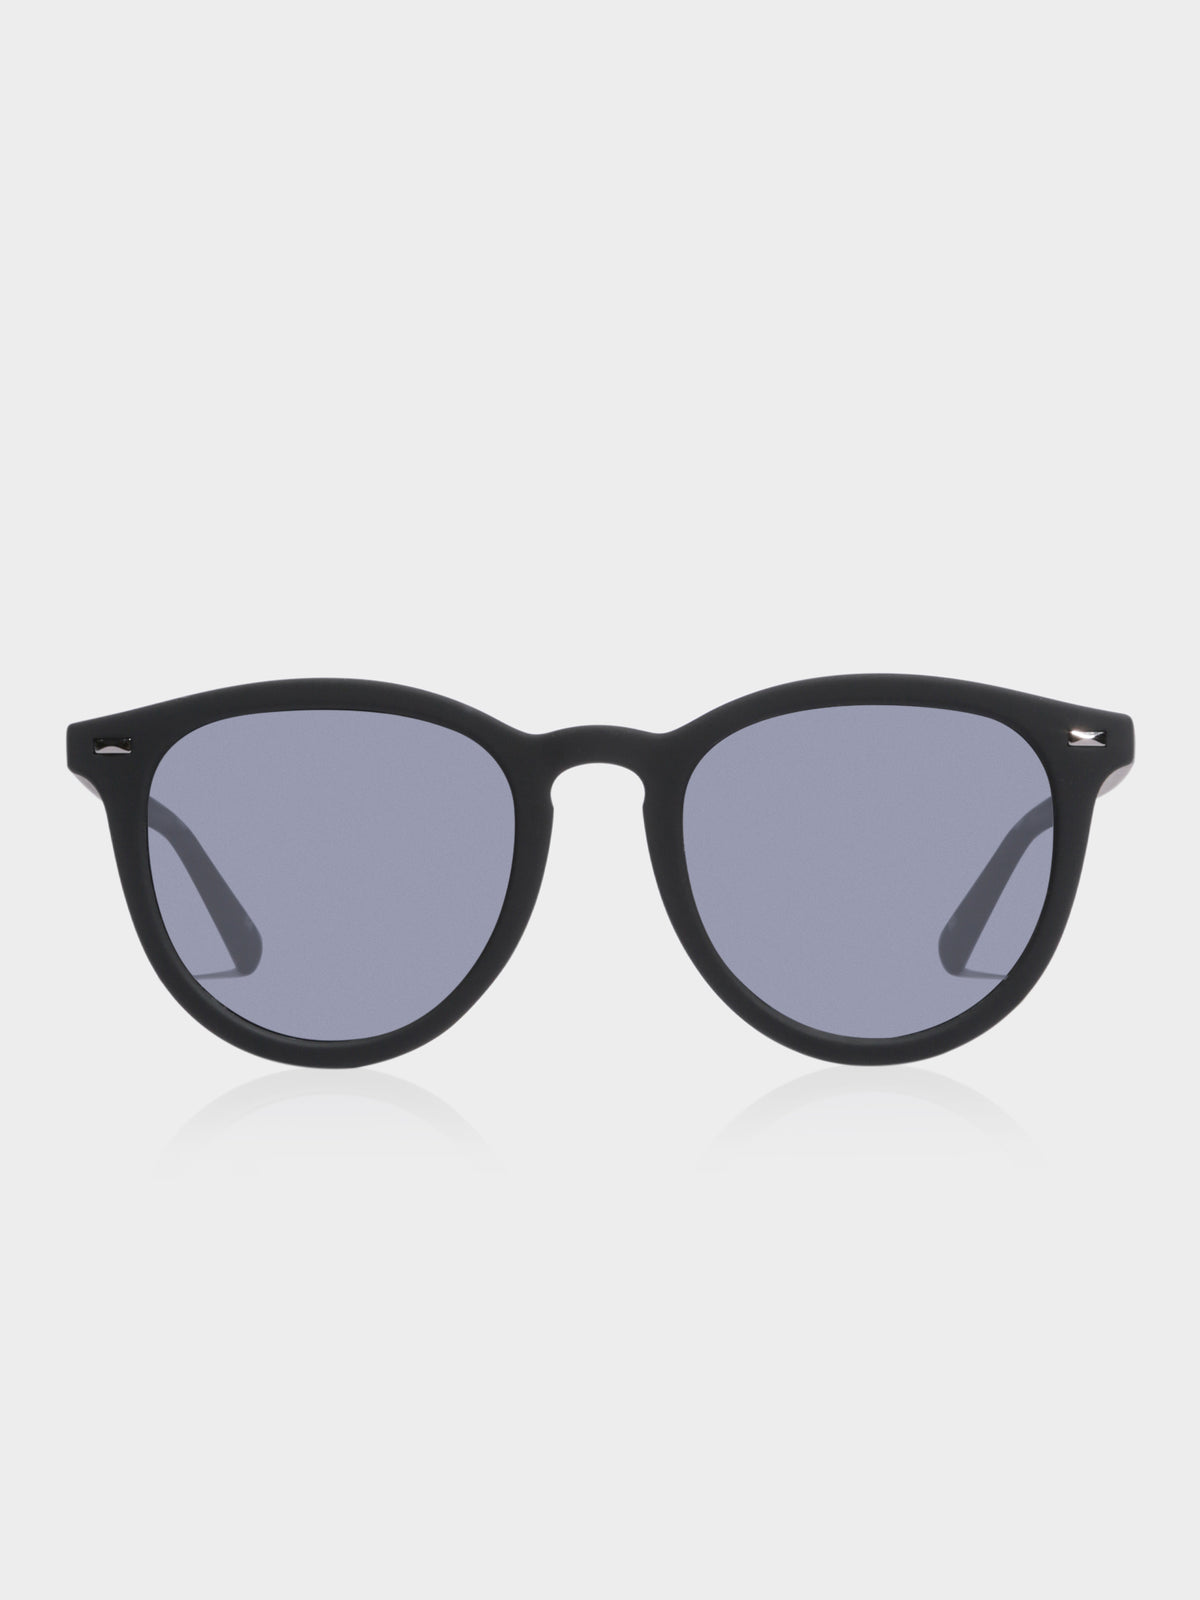 Fire Starter Polarised Sunglasses in Black Rubber